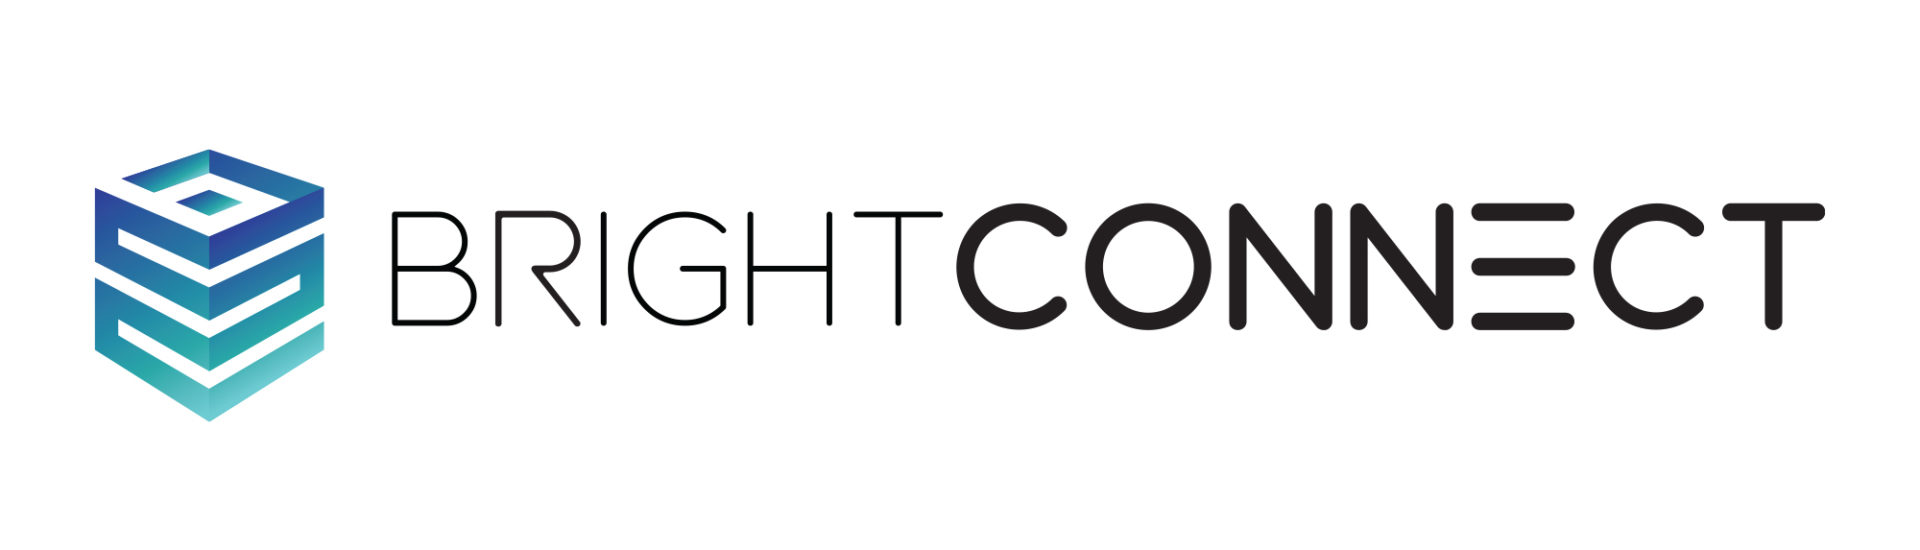 Bright Connect